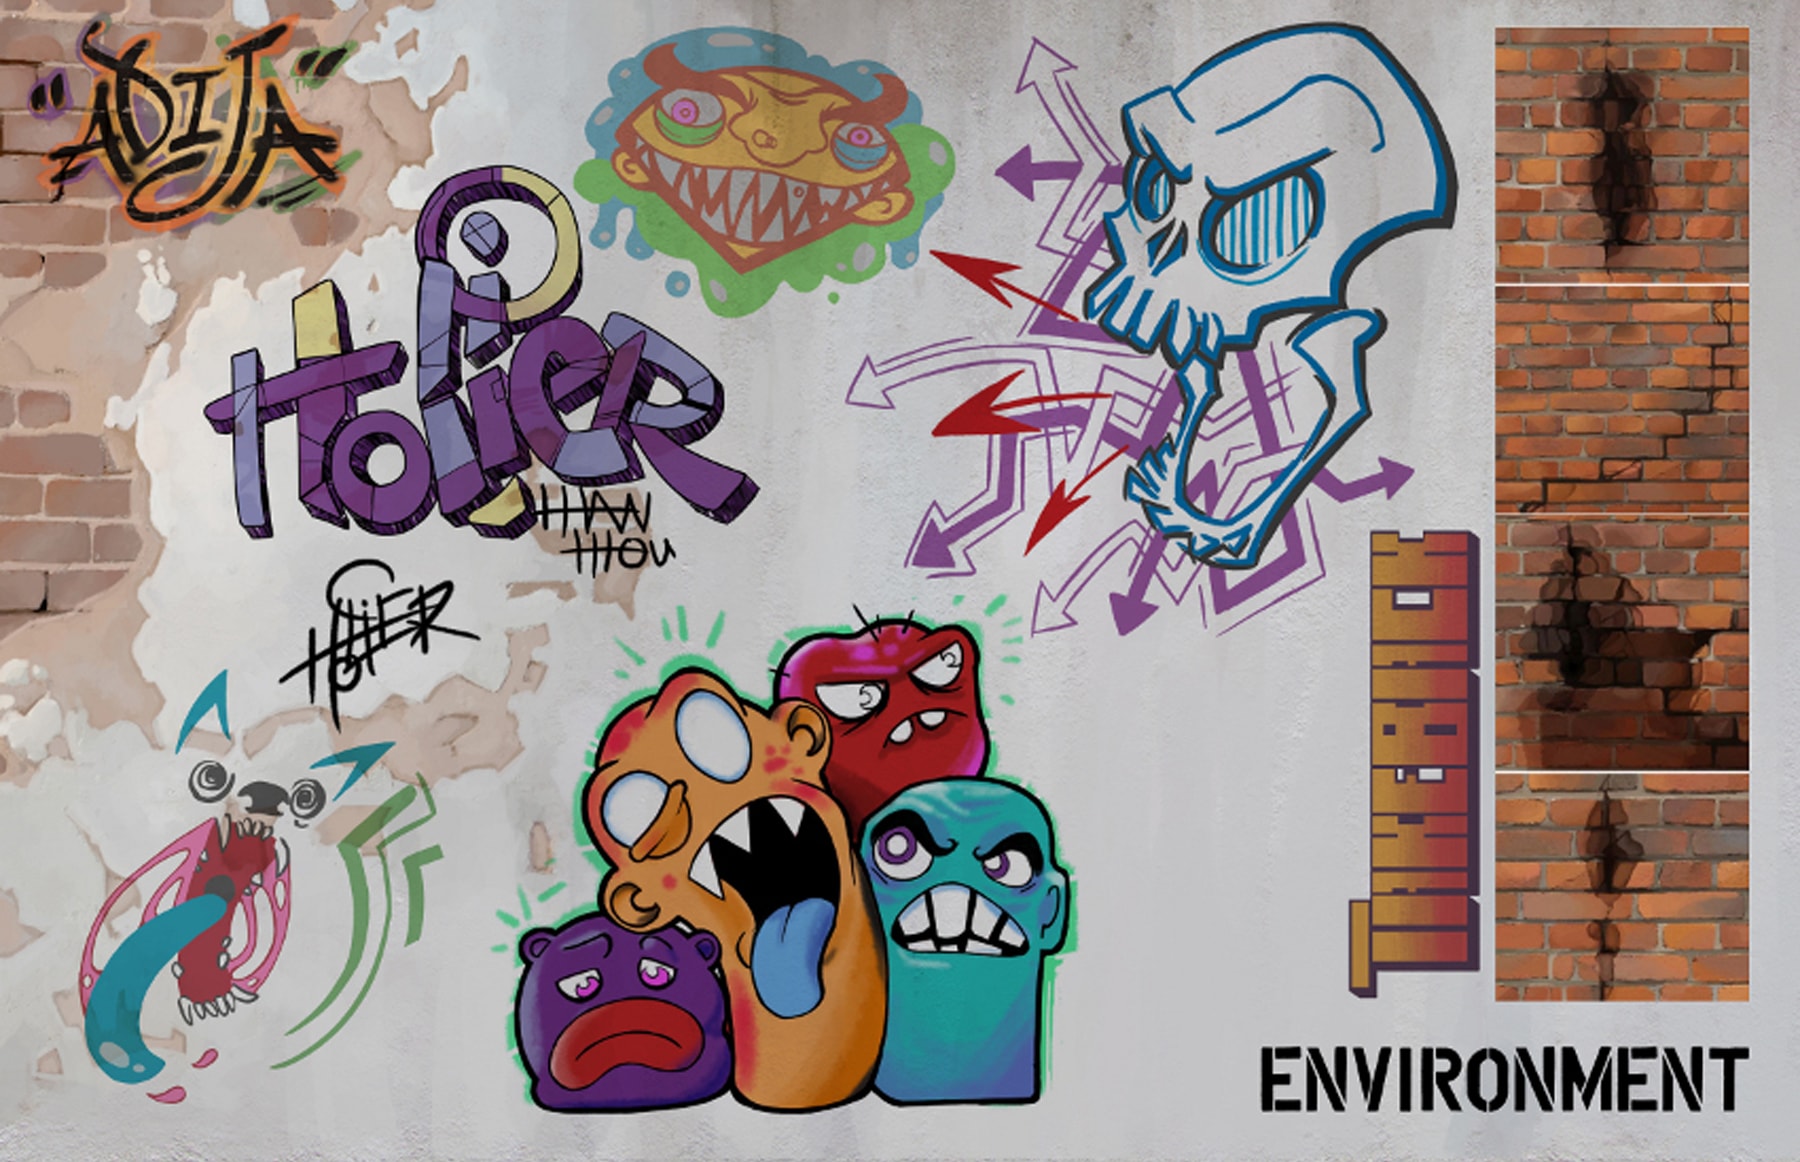 Illustration of elements of Adija's environment, including graffiti artwork and cracked brick walls